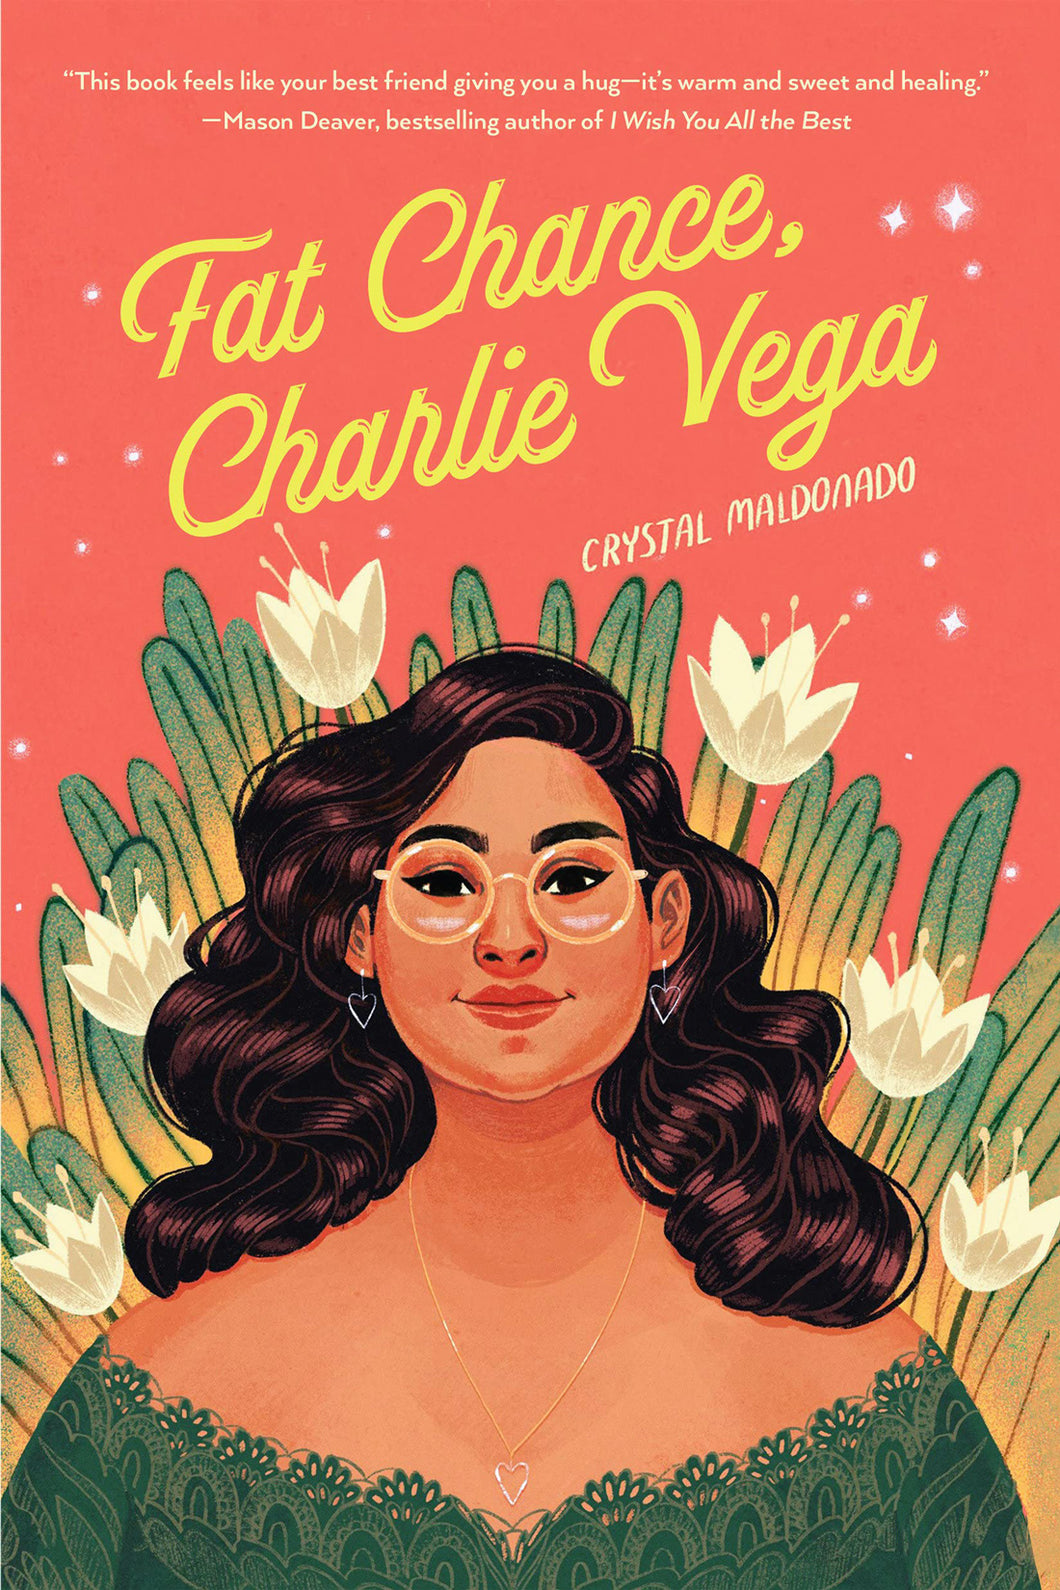 Fat Chance, Charlie Vega by Crystal Maldonado / Hardcover or Paperback - NEW BOOK (English or Spanish)